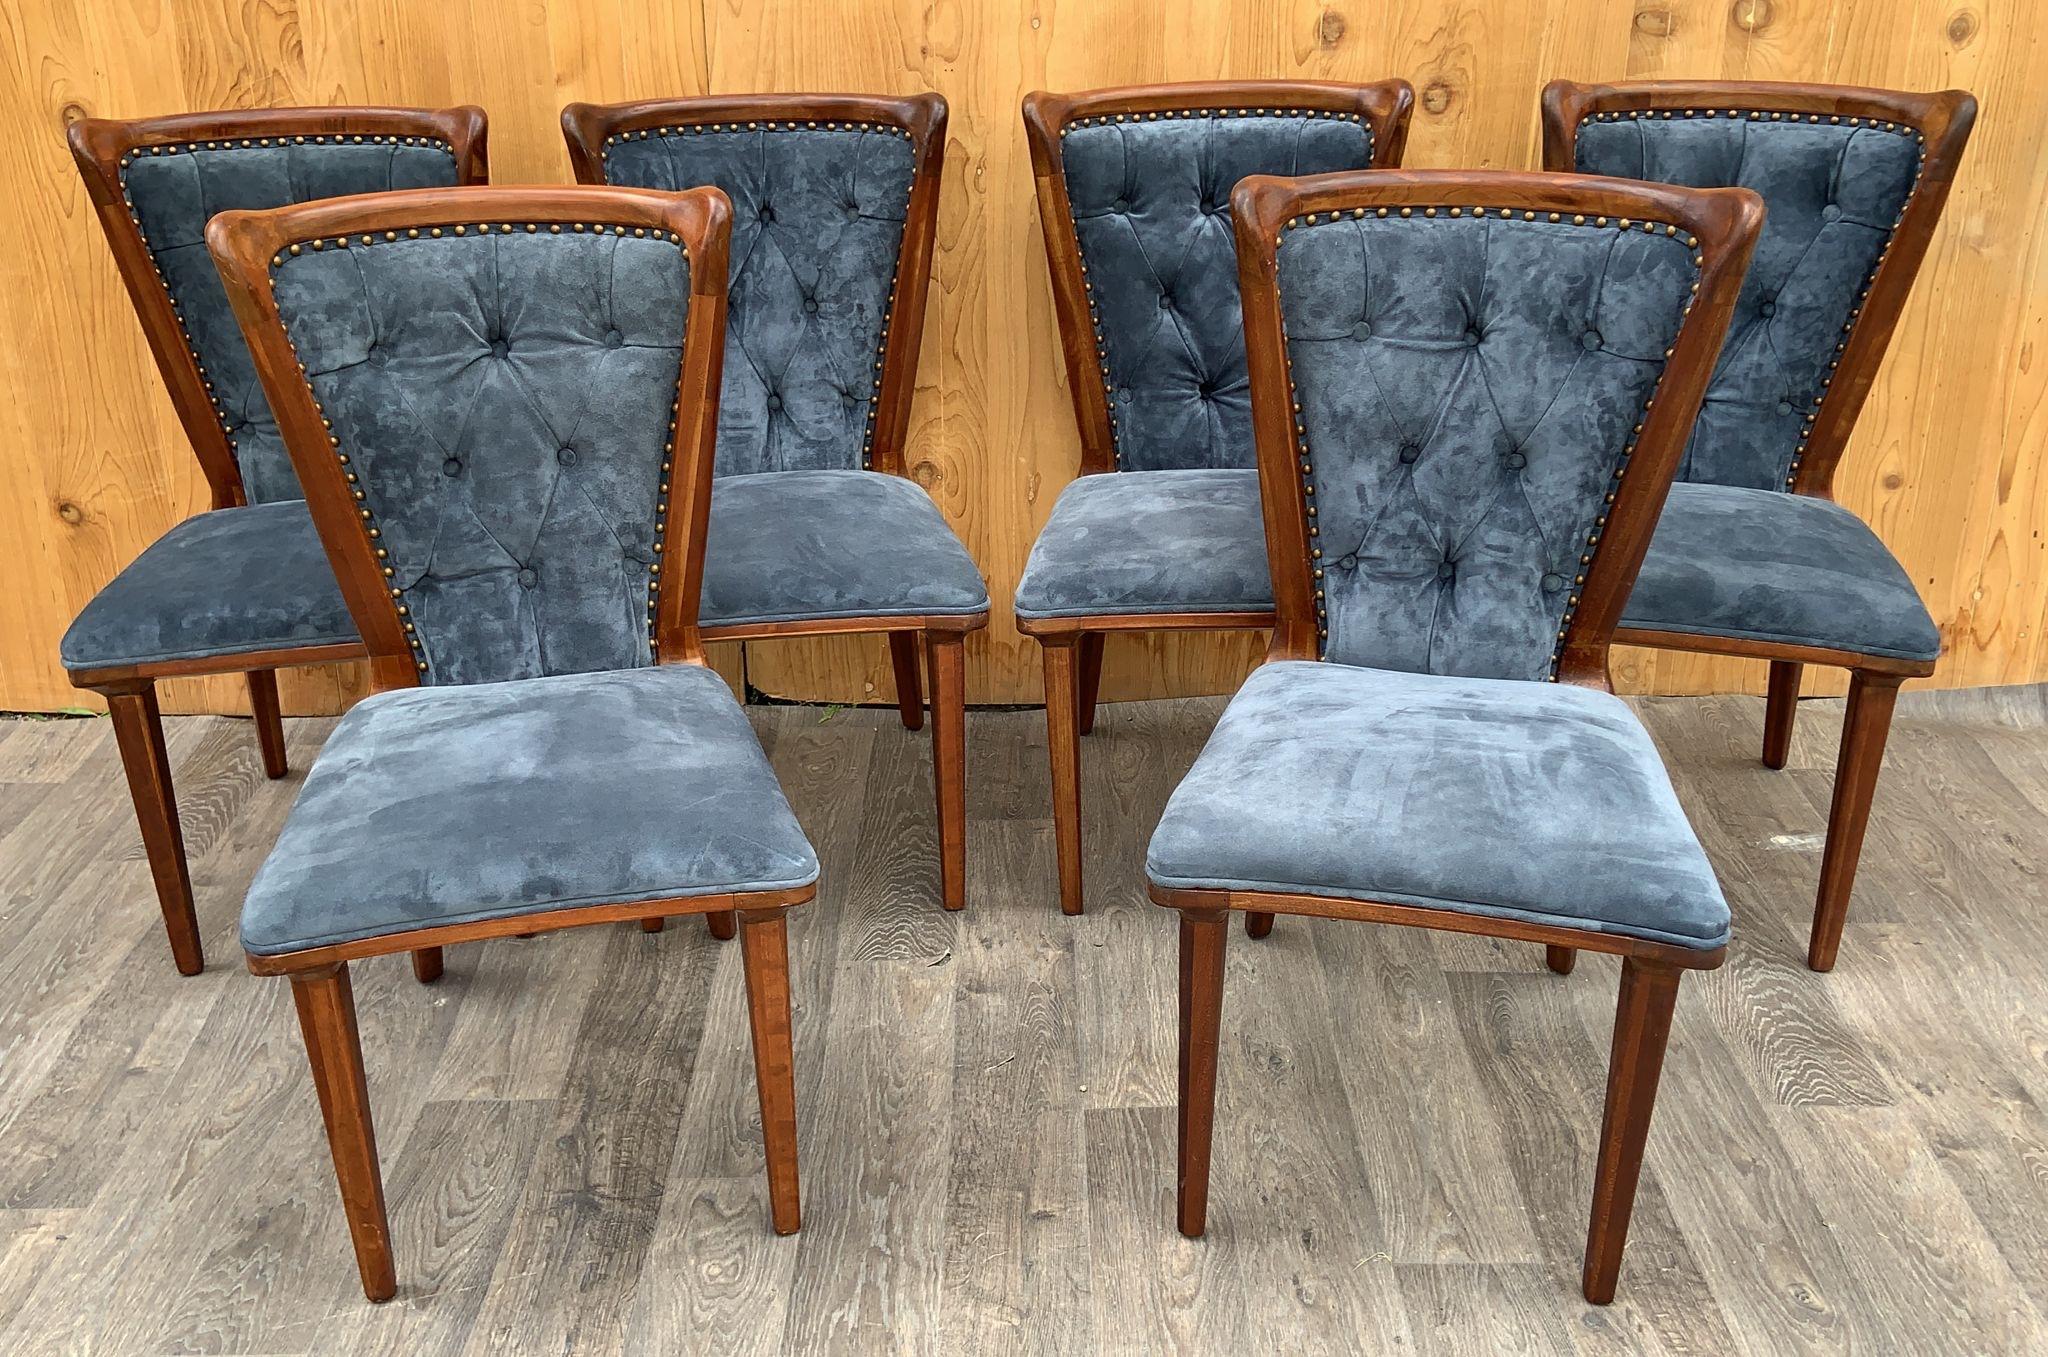 Vintage Italian Art Deco Sculptural Curved Back Dining Chairs Newly Upholstered in a Holly Hunt Blue Suede - Set of 6

Les chaises de salle à manger Vintage Italian Art Deco Sculptural Curved Back, récemment tapissées en daim bleu Holly HUNT,